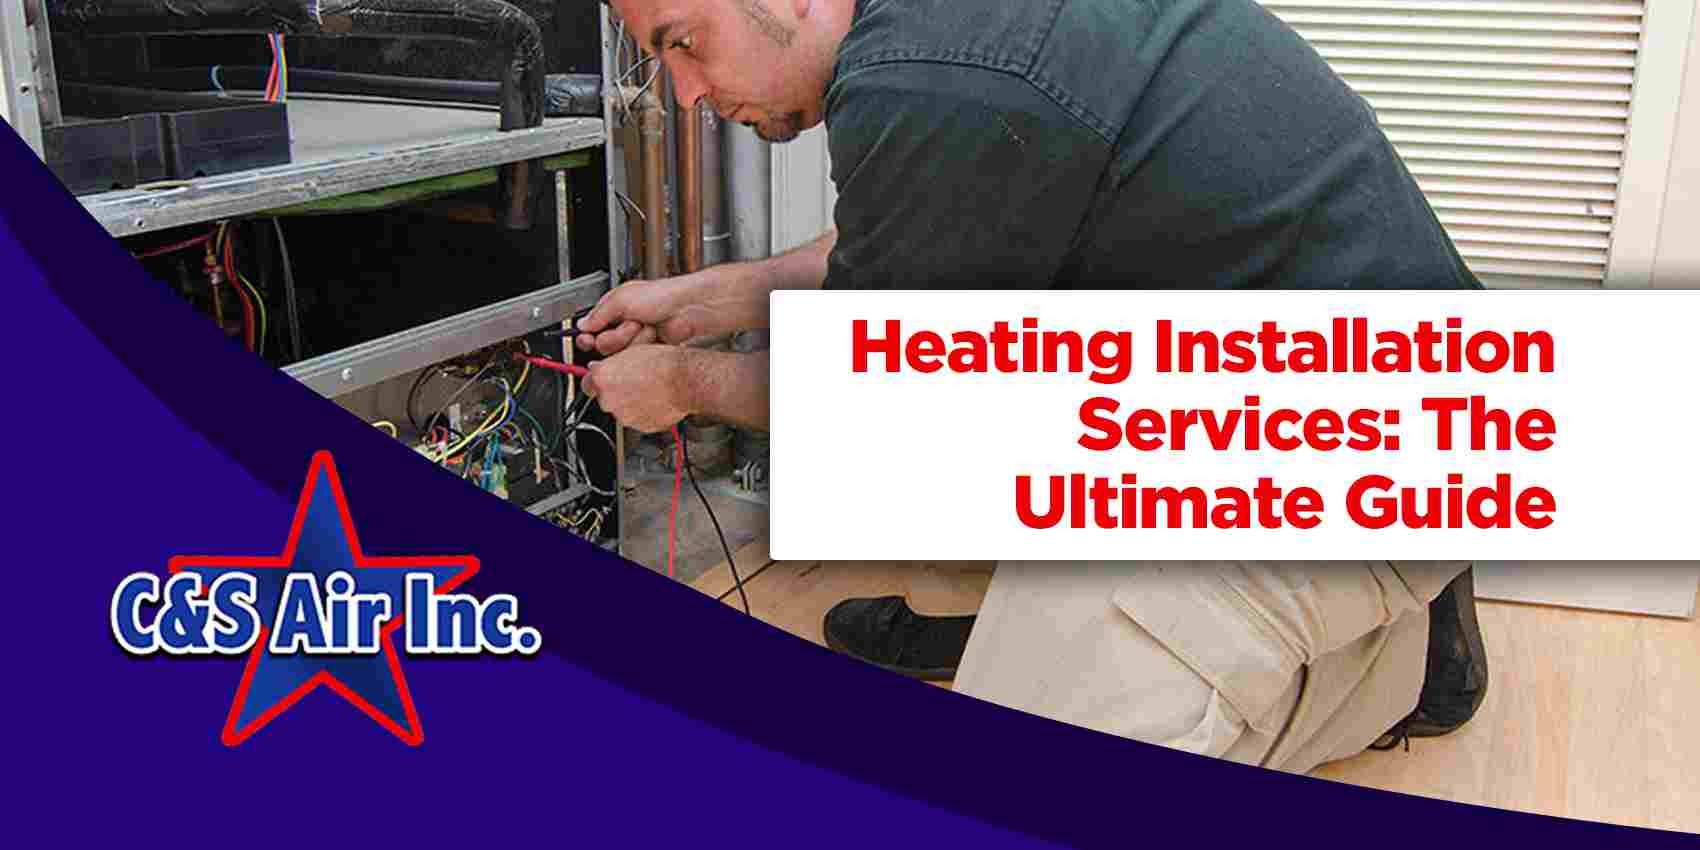 Heating Installation Services In Arlington, TX